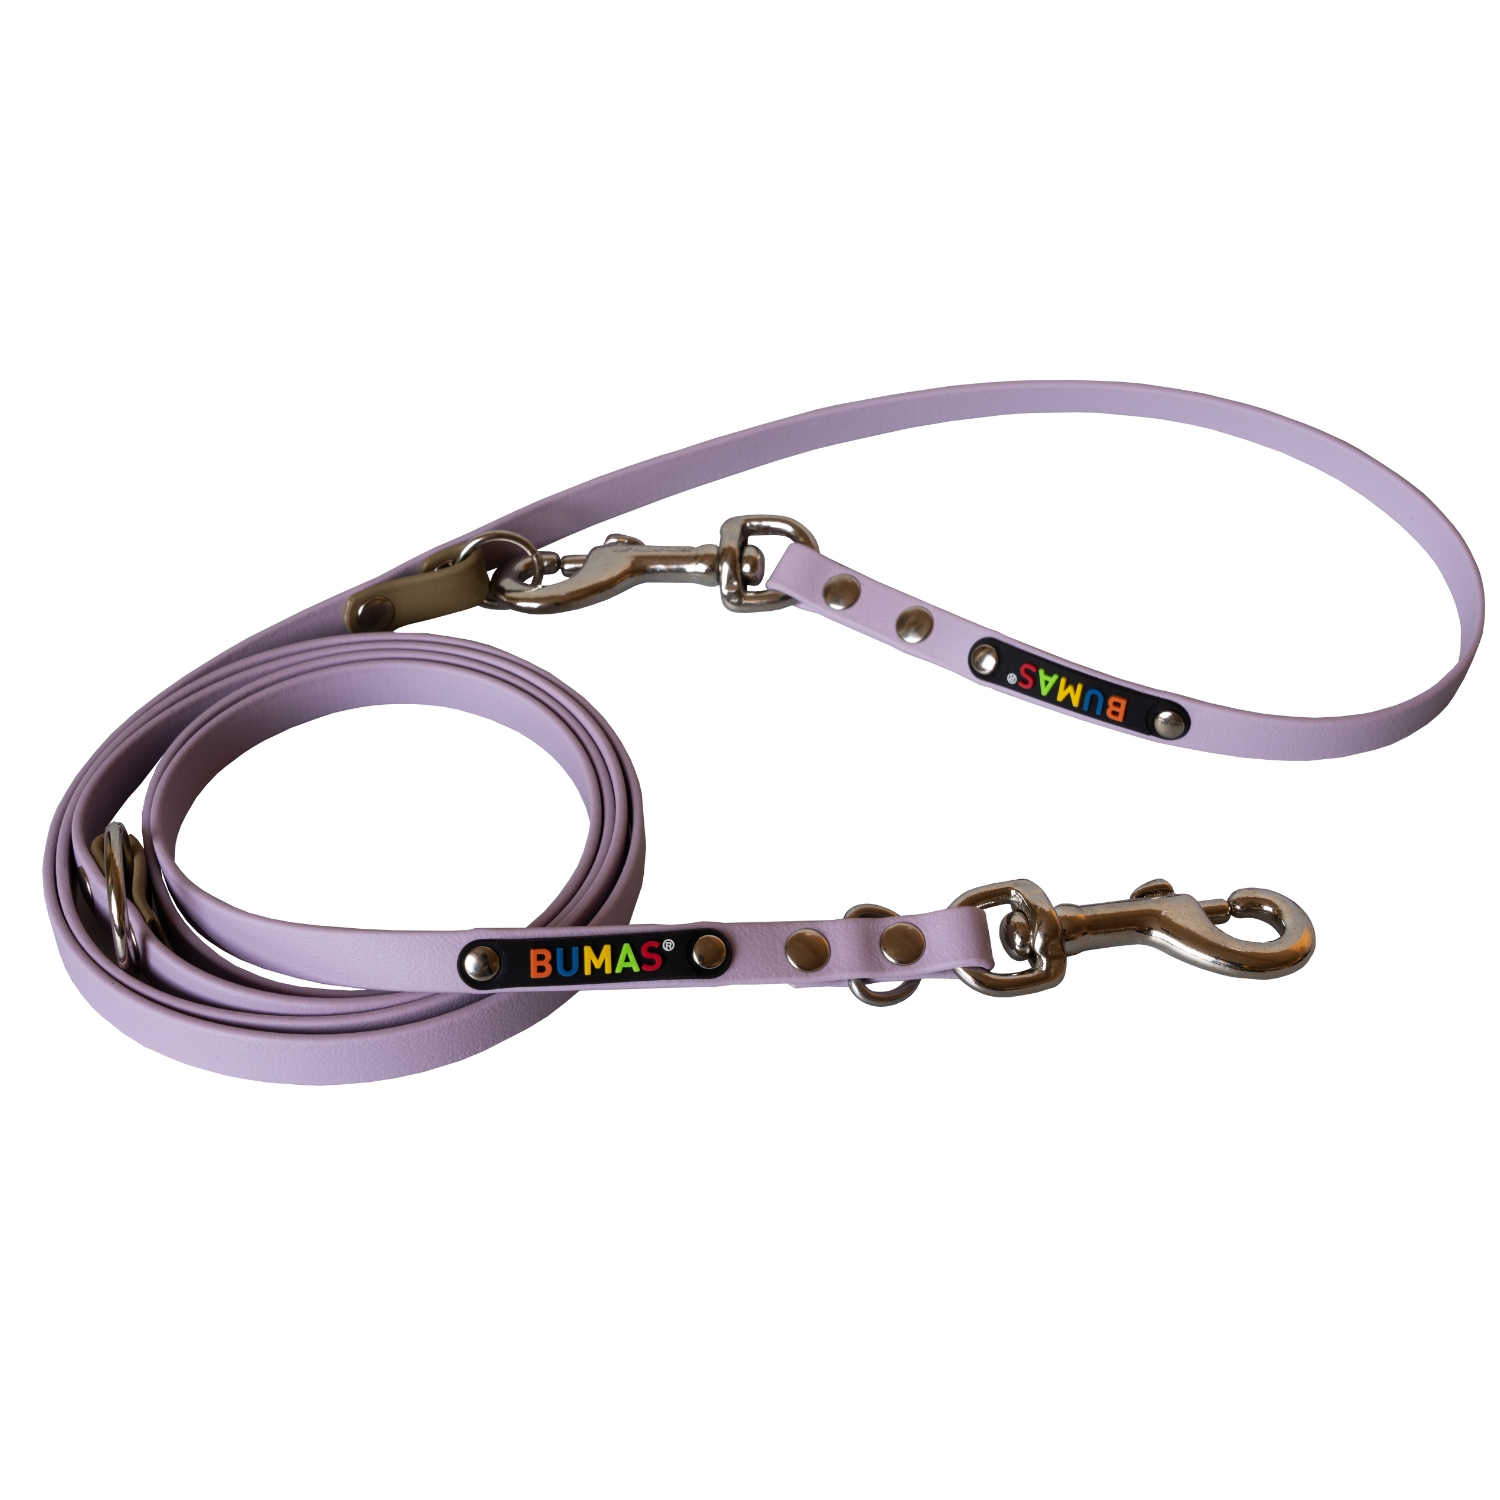 BUMAS adjustable biothane dogleash 2m long, color Beige & Pastell violett